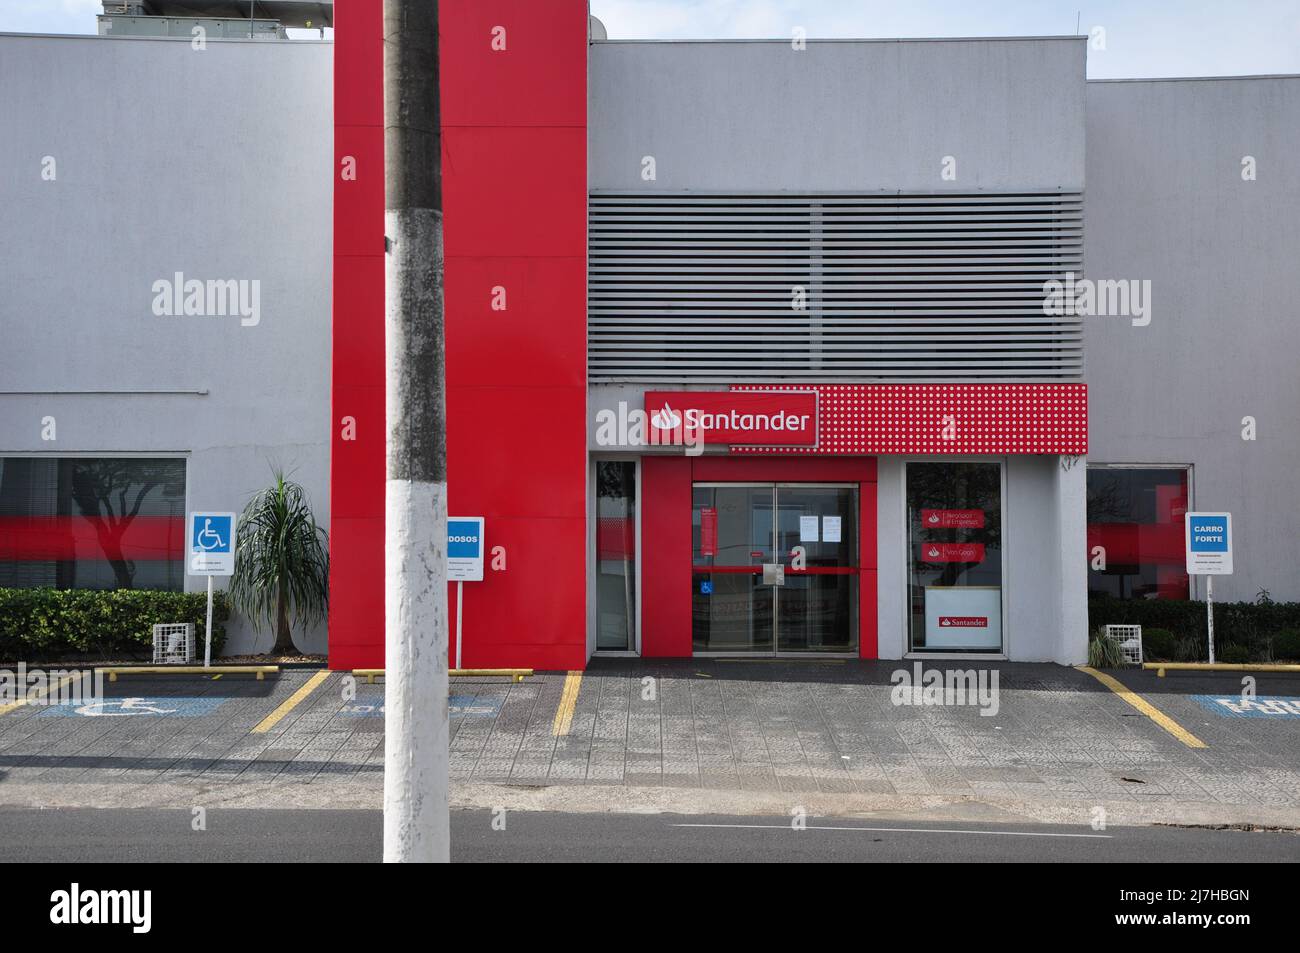 Facade of Santander Banking Agency, City Marilia, Sao Paulo, Brazil. August 30, 2021. Facade of the Banco Santander branch, with priority parking plat Stock Photo